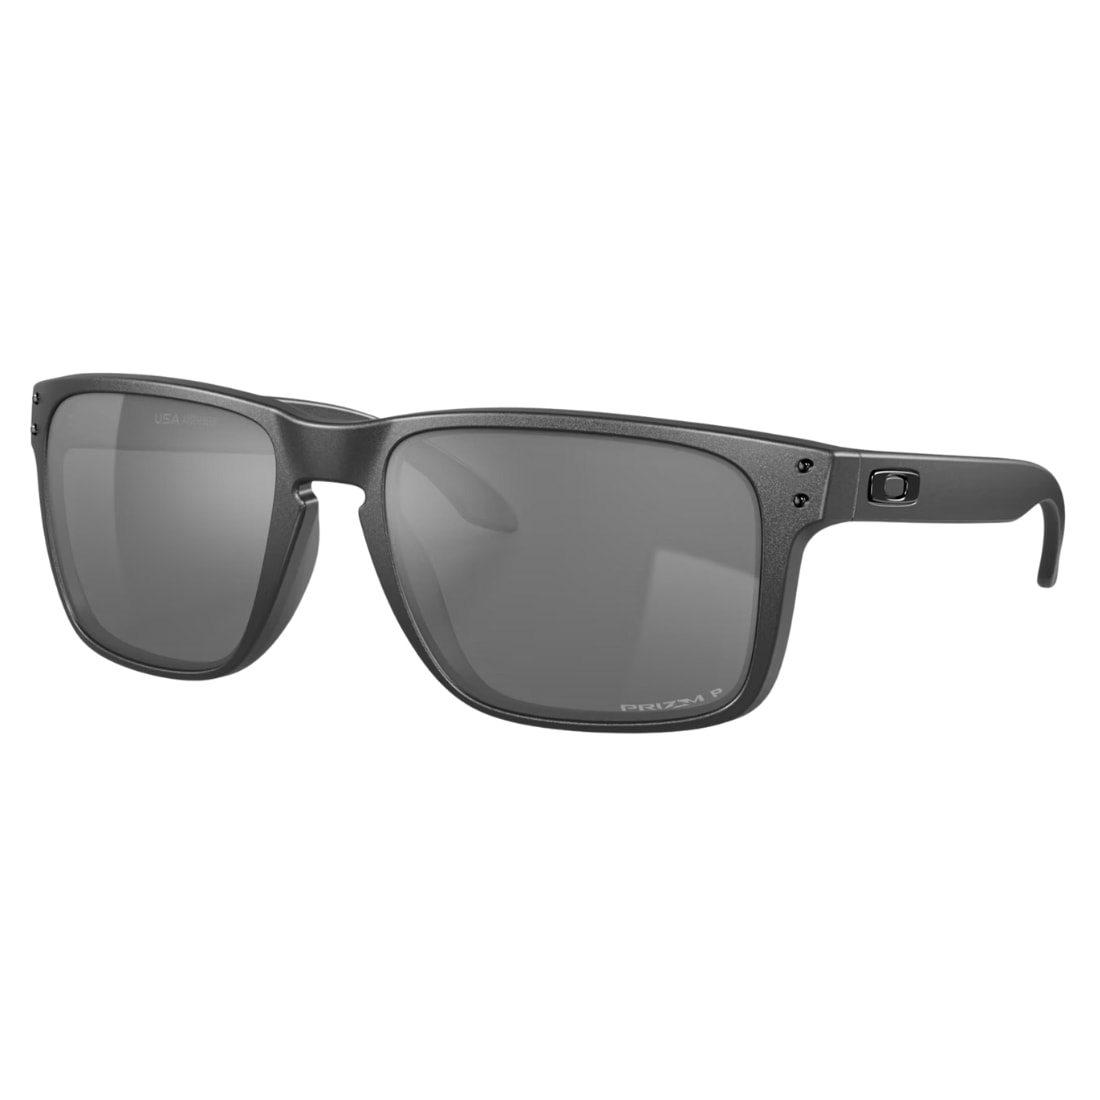 Oakley Holbrook Xl Polarised Sunglasses - Steel/Prizm Black Polarized - Square/Rectangular Sunglasses by Oakley